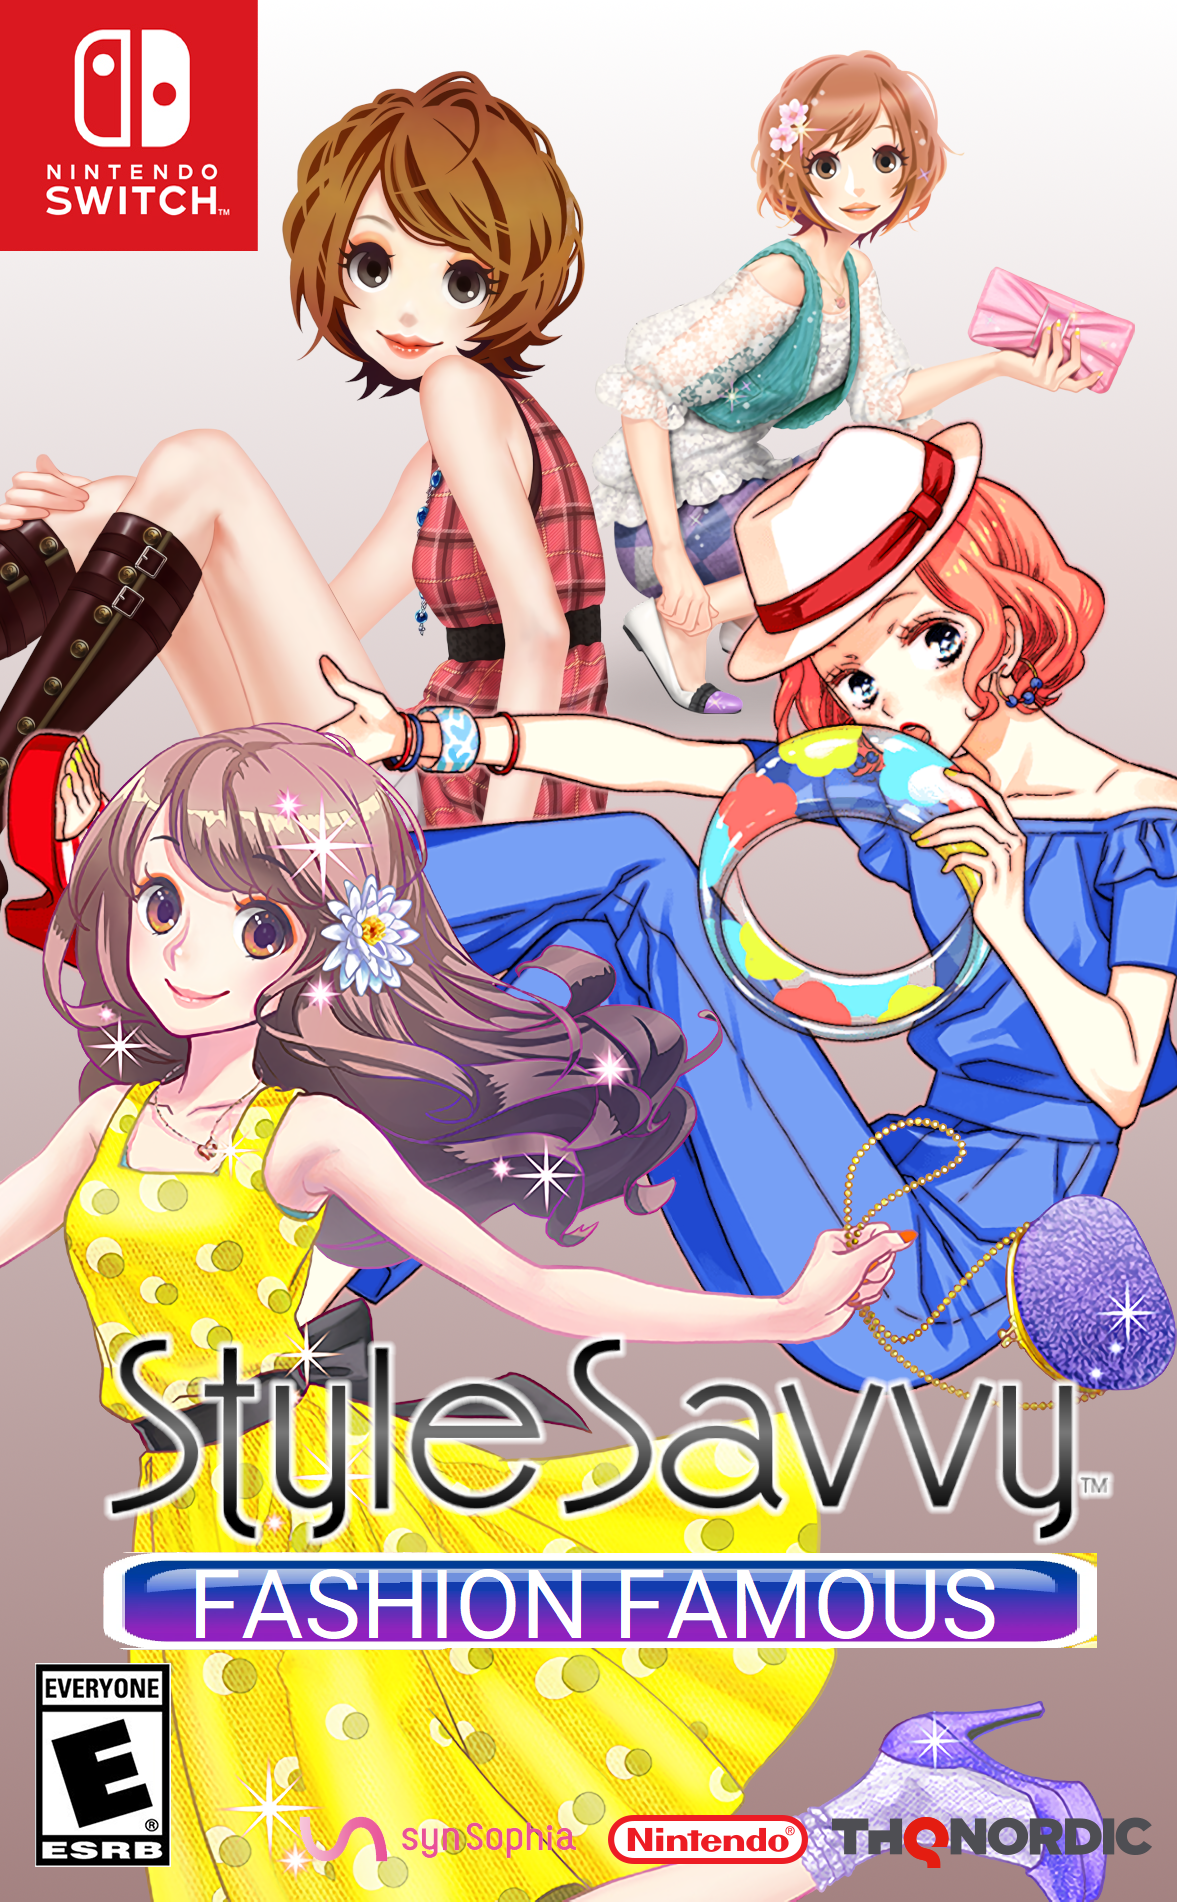 Fashion Dreamer Nintendo Switch Japanese package Dress-up fashion new  generation